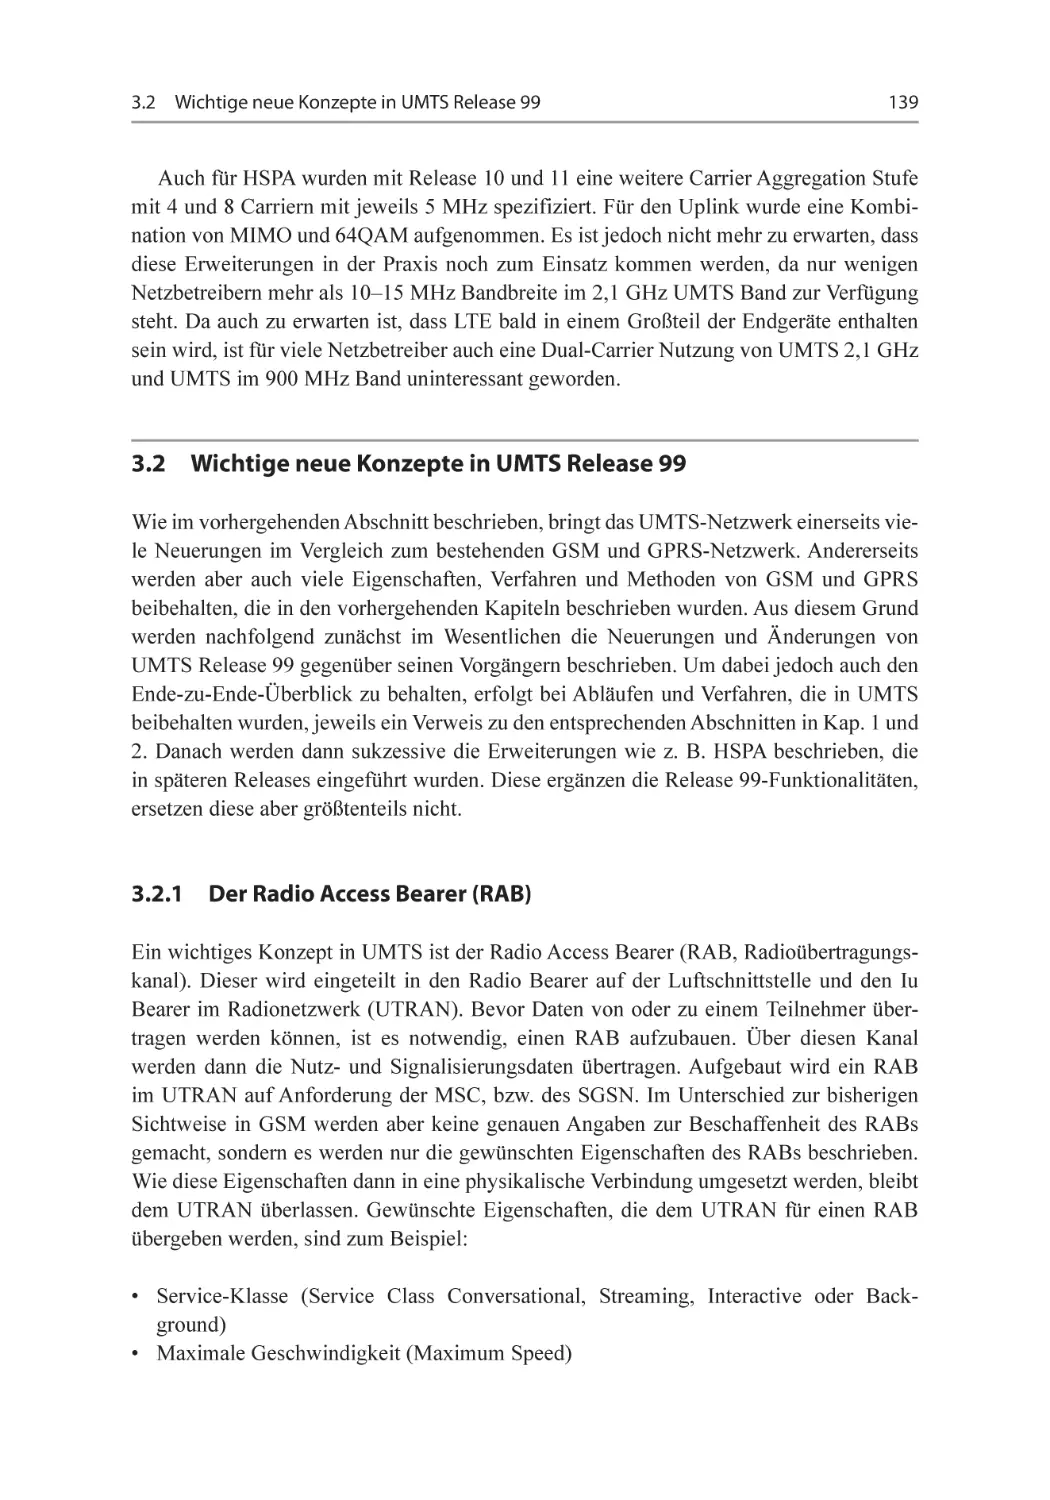 3.2 Wichtige neue Konzepte in UMTS Release 99
3.2.1 Der Radio Access Bearer (RAB)